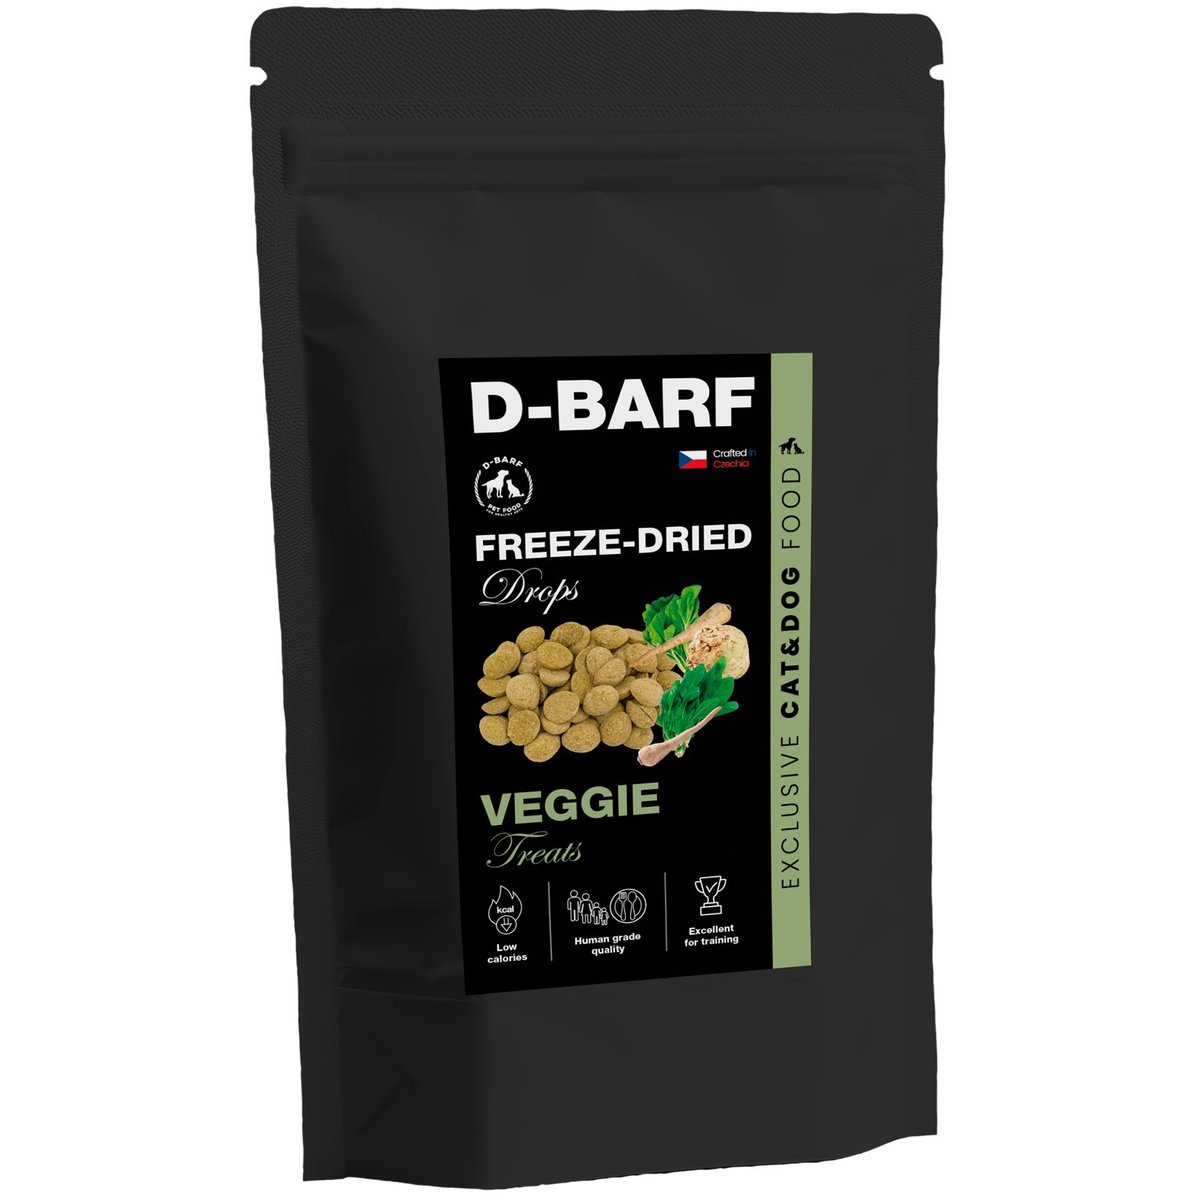 D-BARF Lyo Drops veggie